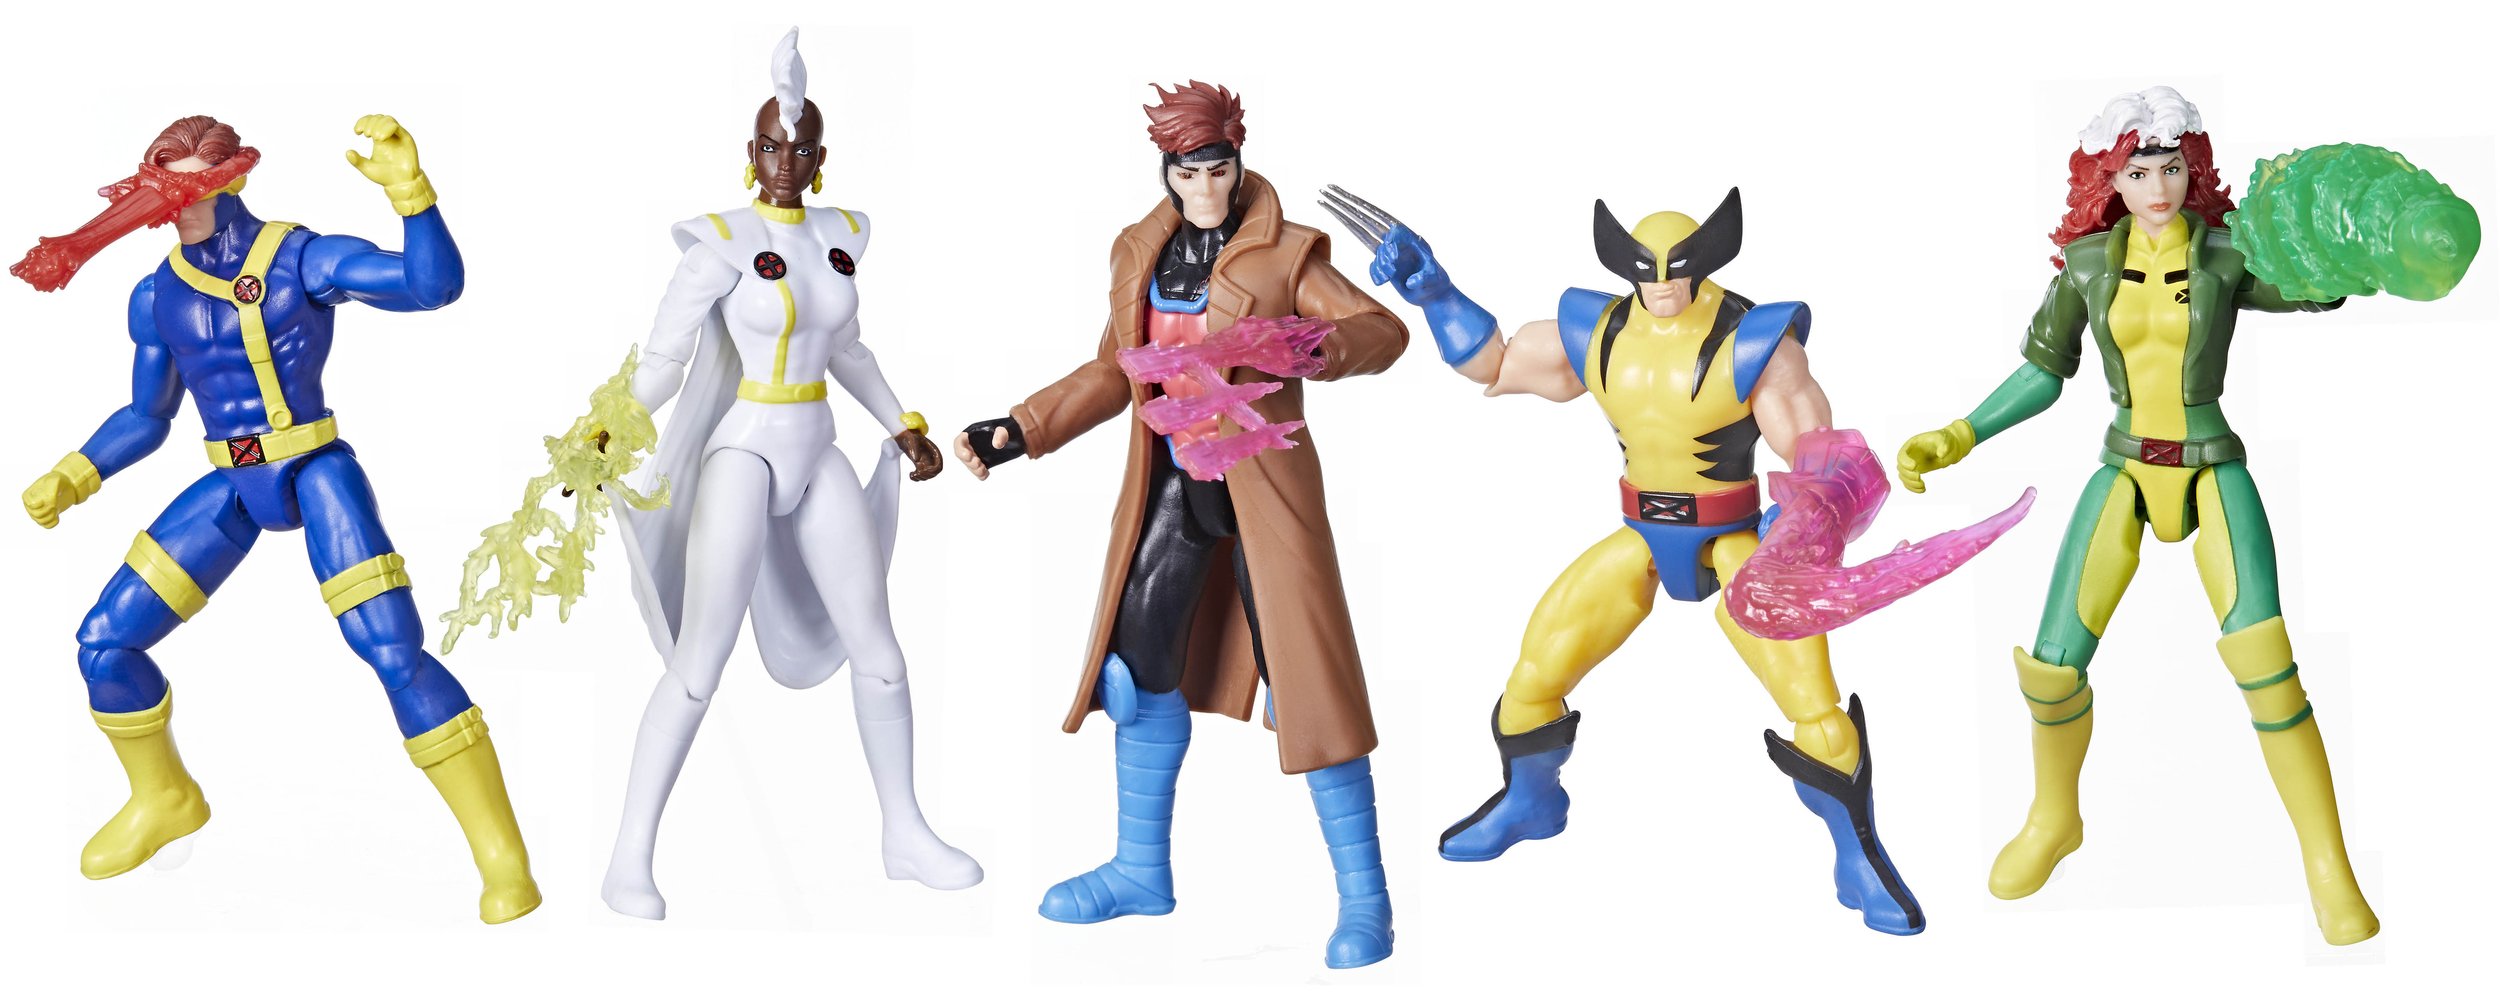 X-Men 97 Rogue Figure REVIEW & Photos (Hasbro Epic Hero) - Marvel